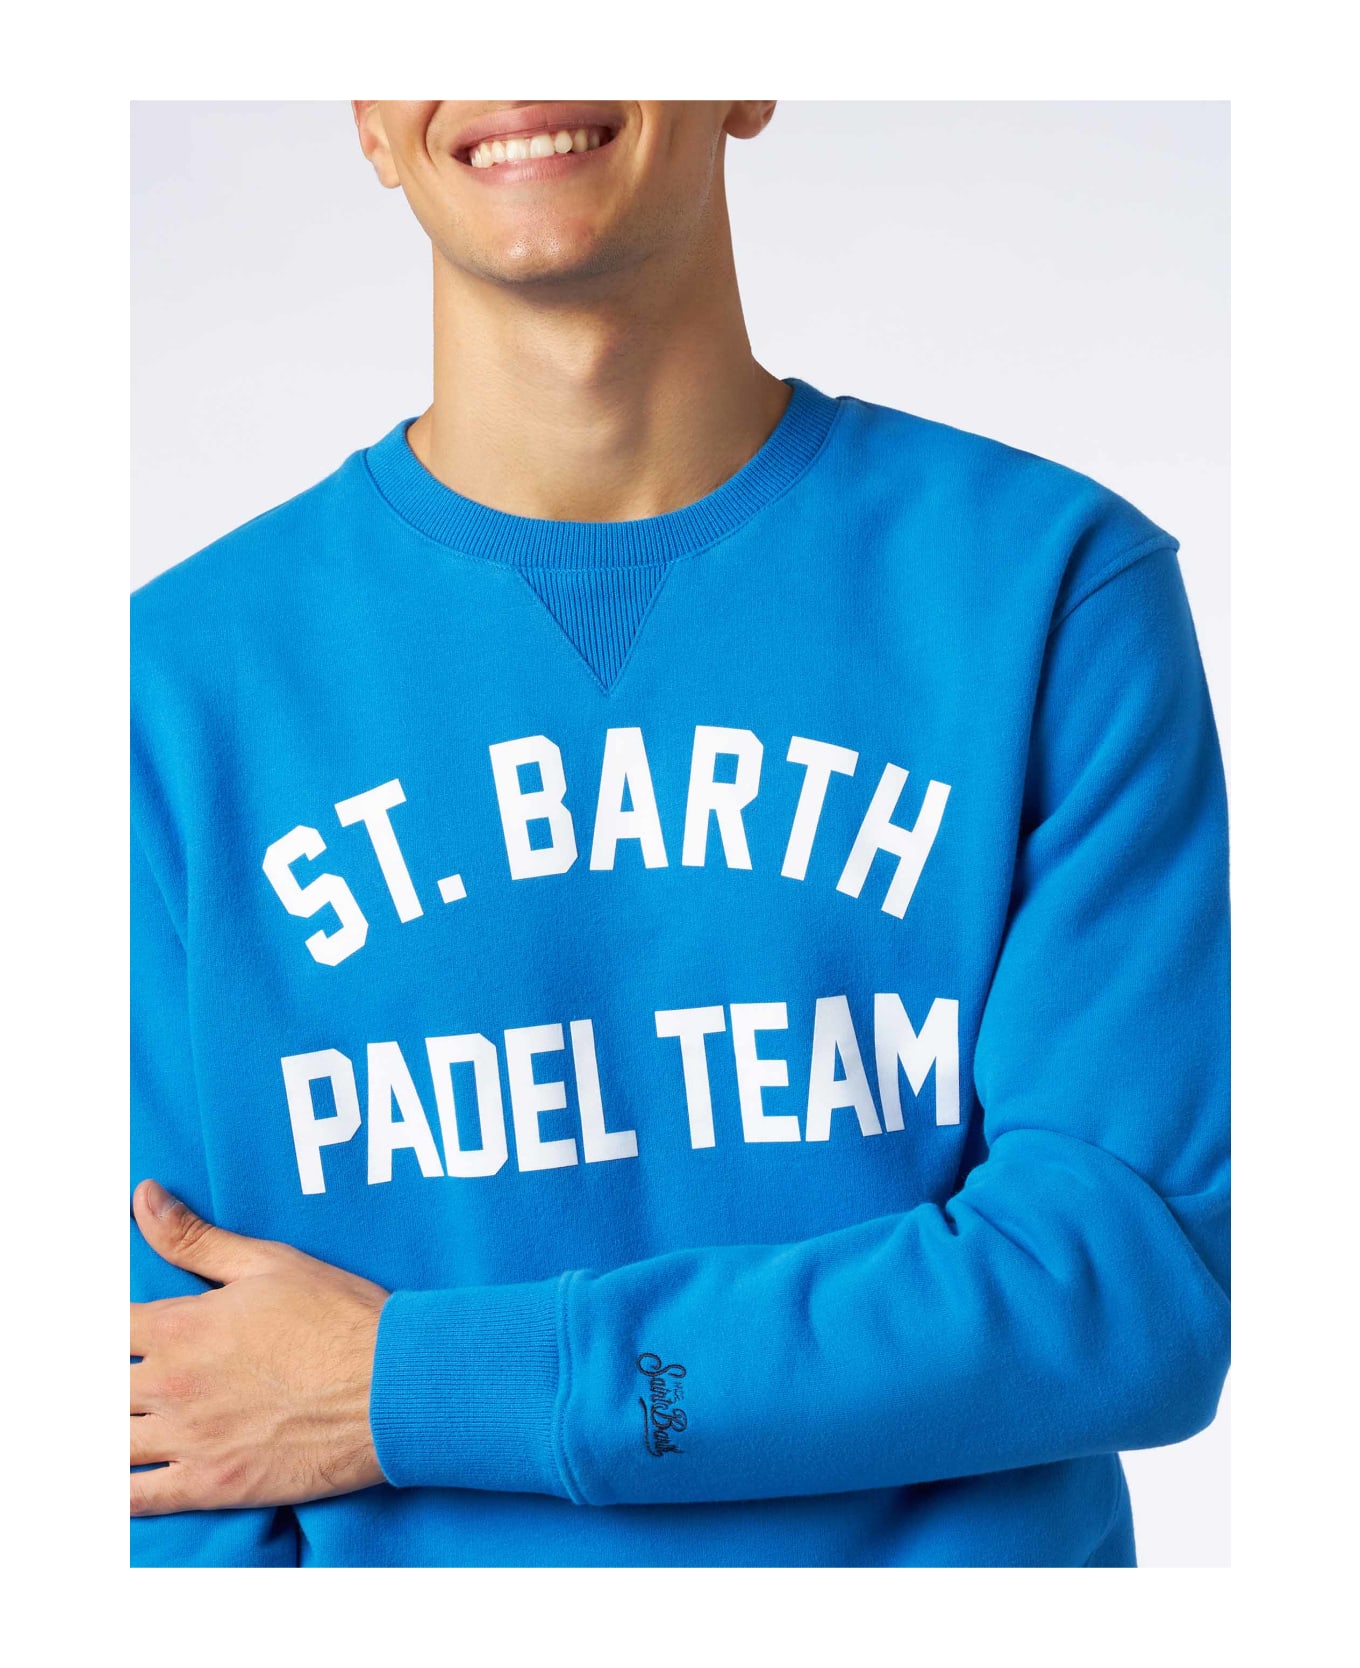 MC2 Saint Barth Cotton Sweatshirt With St. Barth Padel Team Print - BLUE